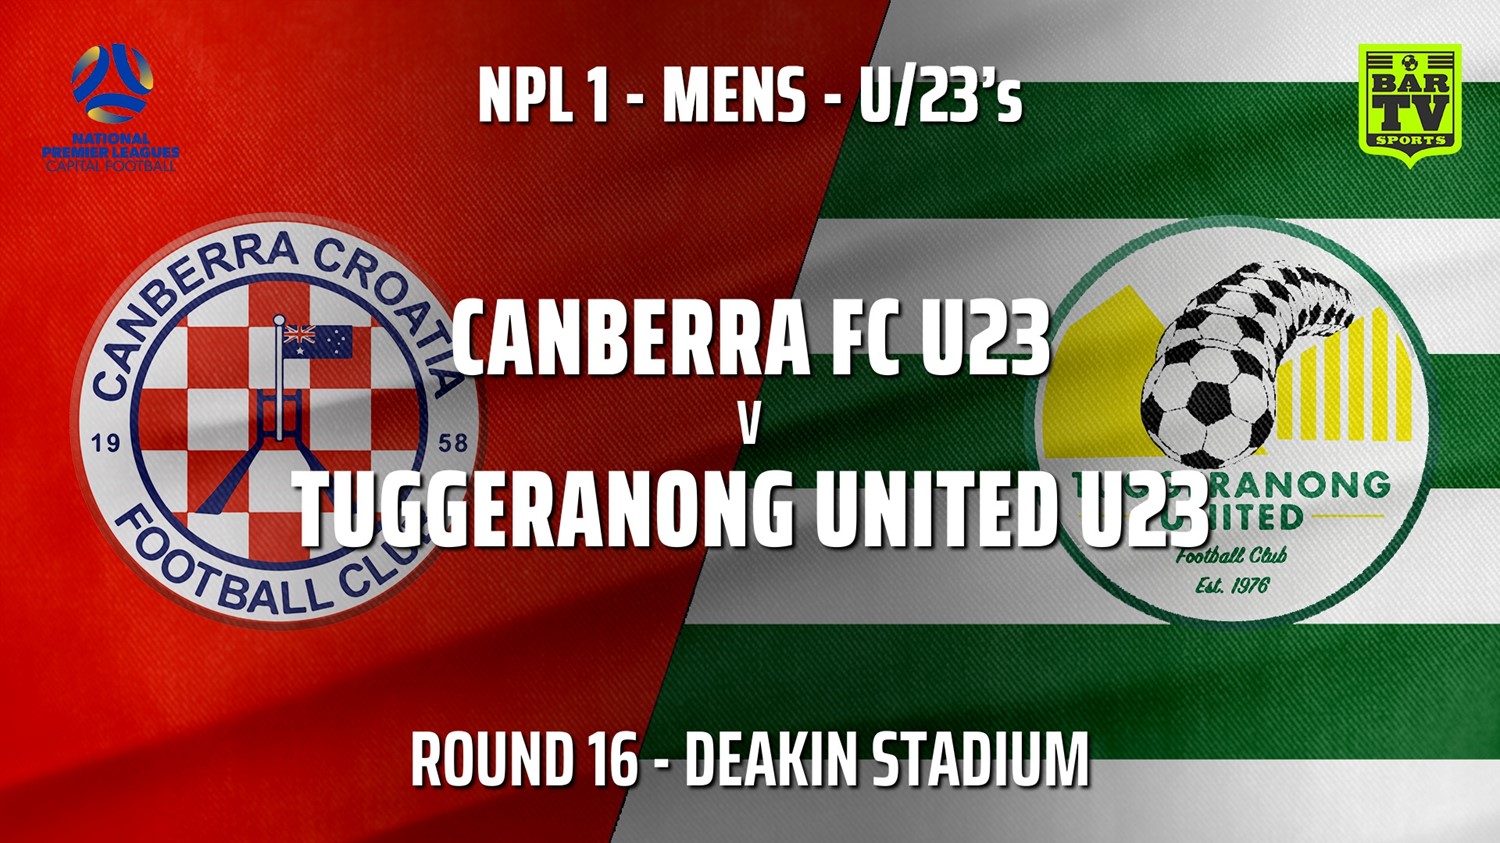 210801-Capital NPL U23 Round 16 - Canberra FC U23 v Tuggeranong United U23 Minigame Slate Image